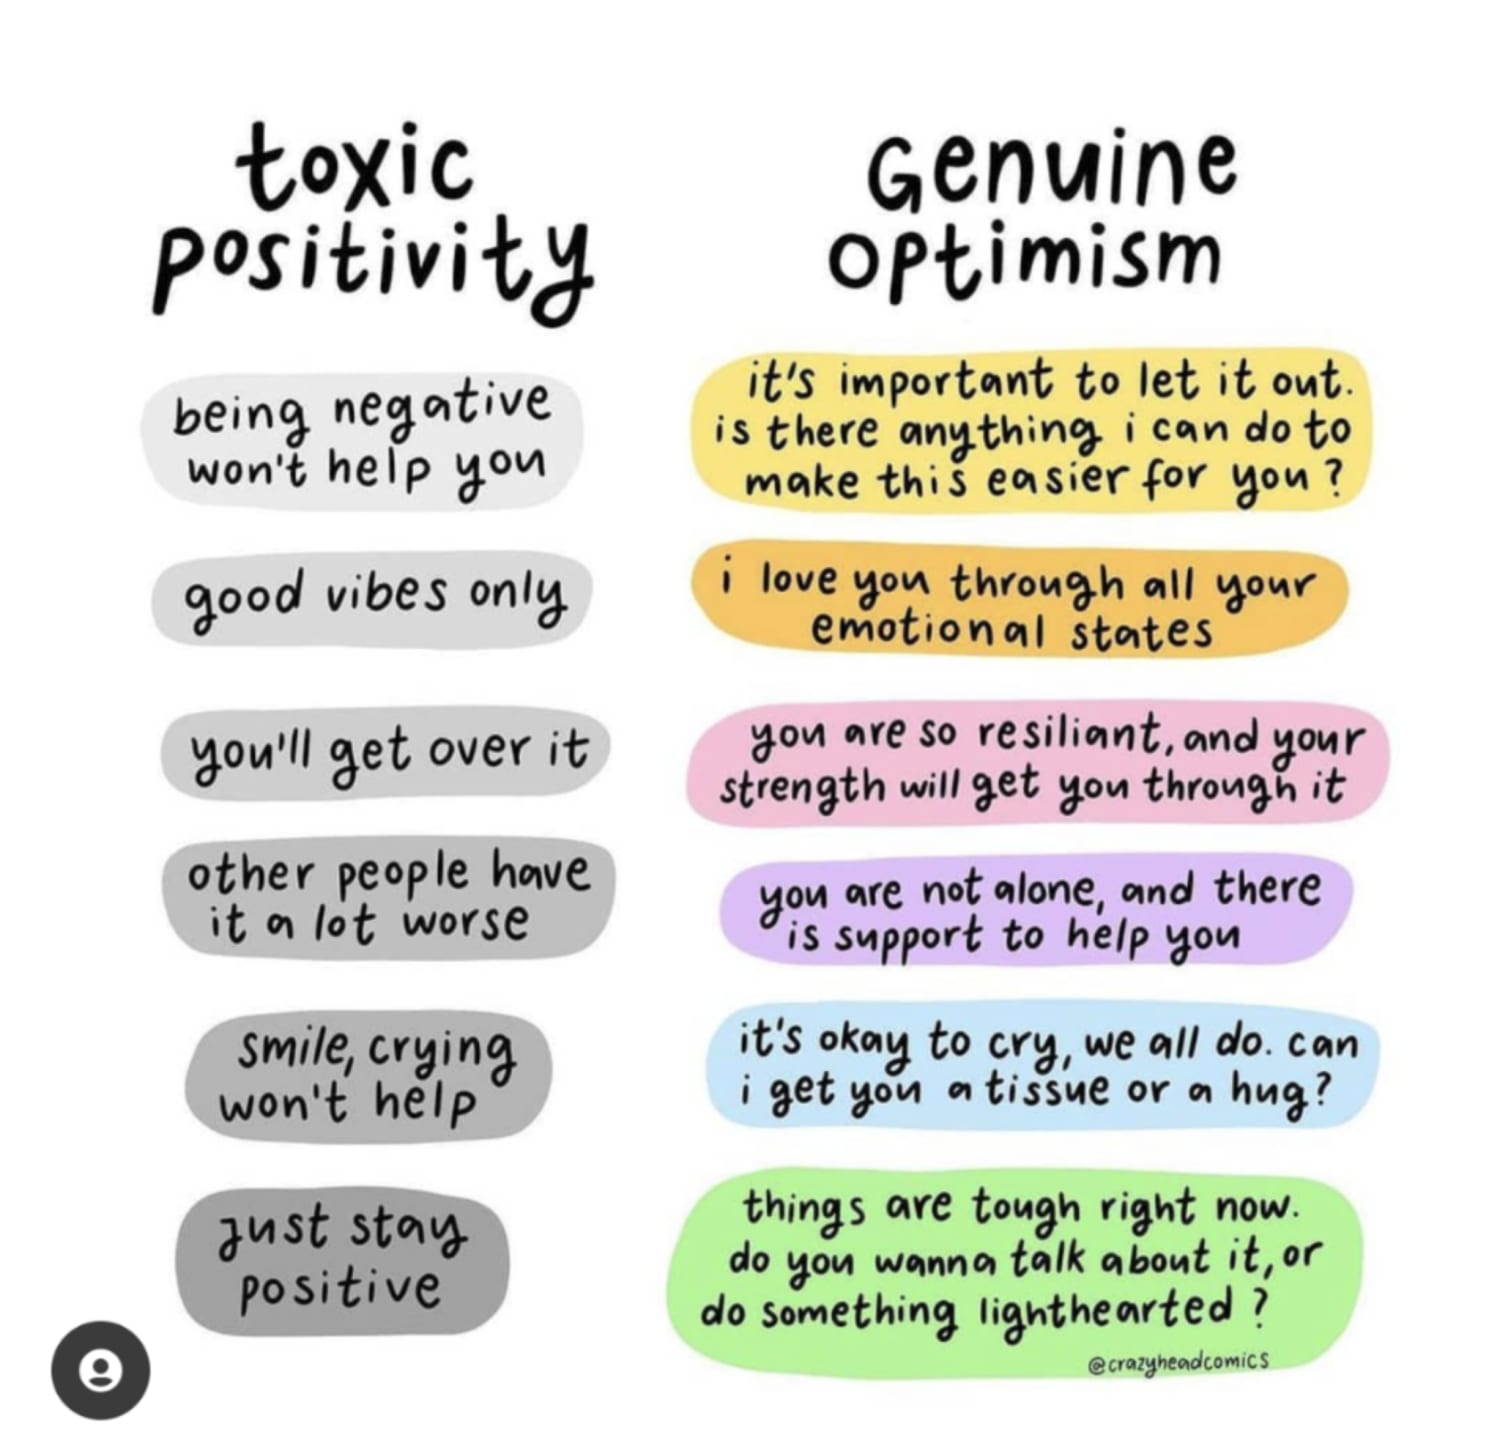 Toxic positivity vs Genuine optimism